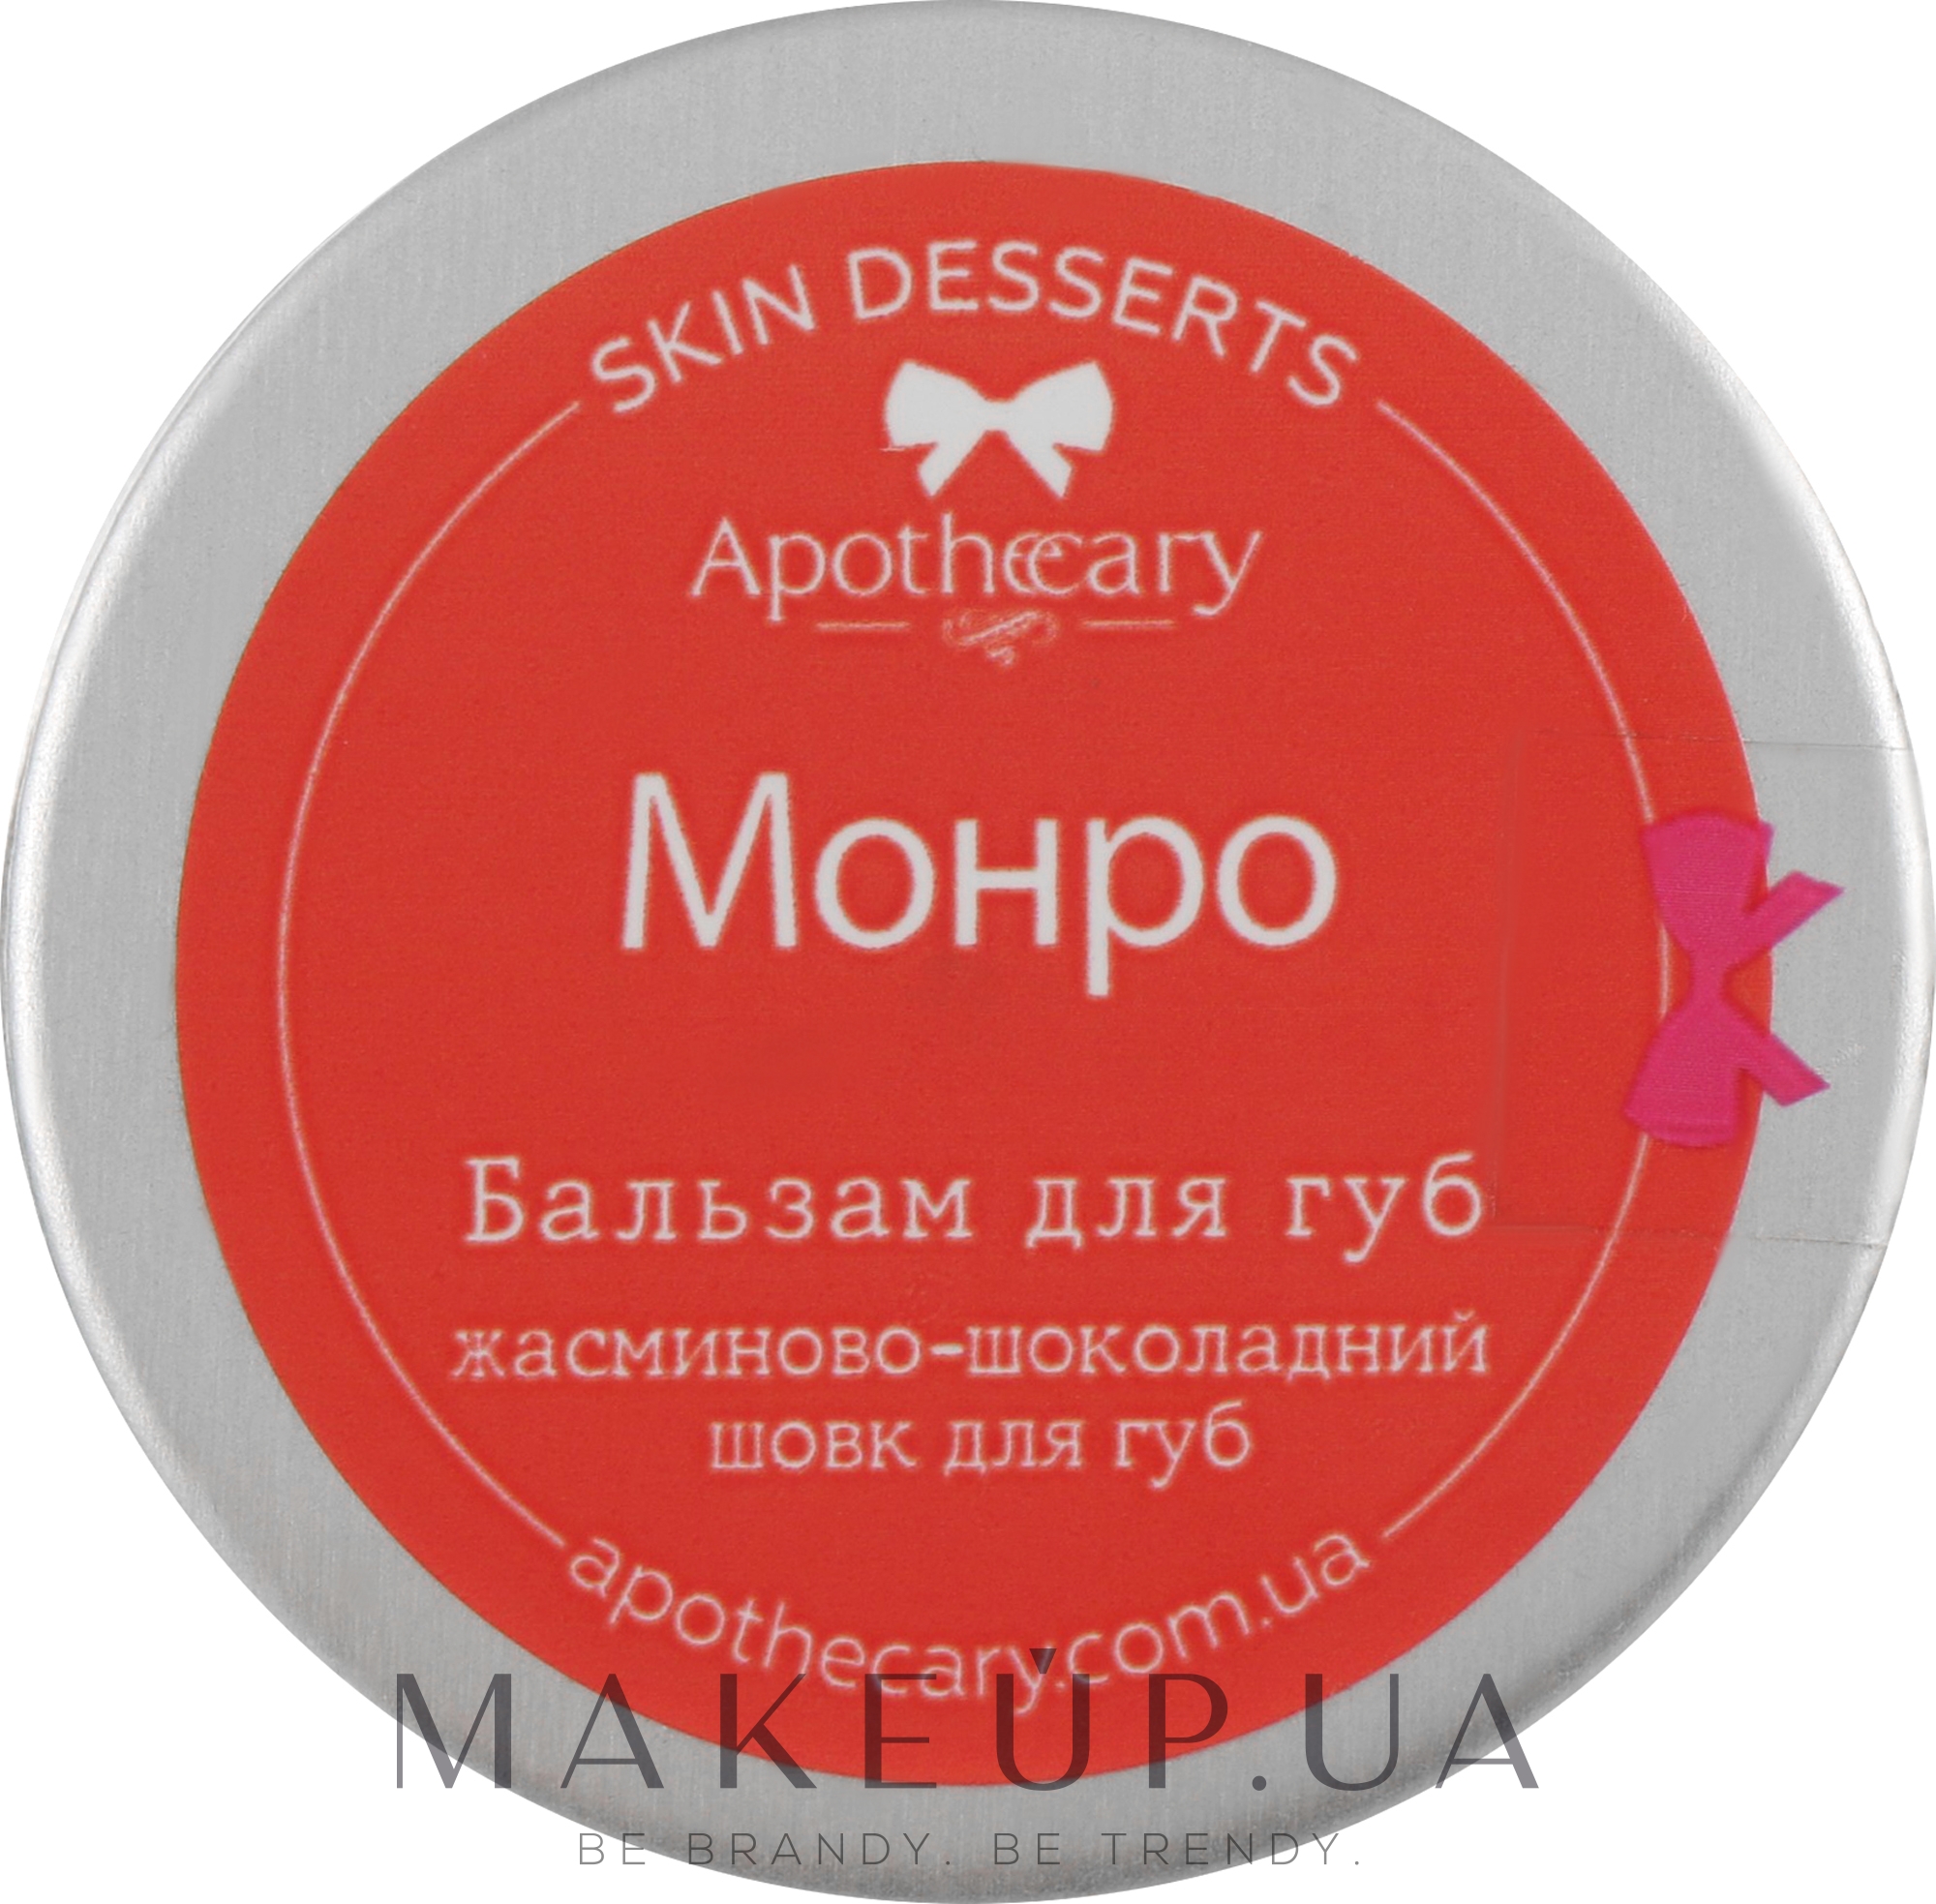 Бальзам для губ "Монро" - Apothecary Skin Desserts — фото 13g